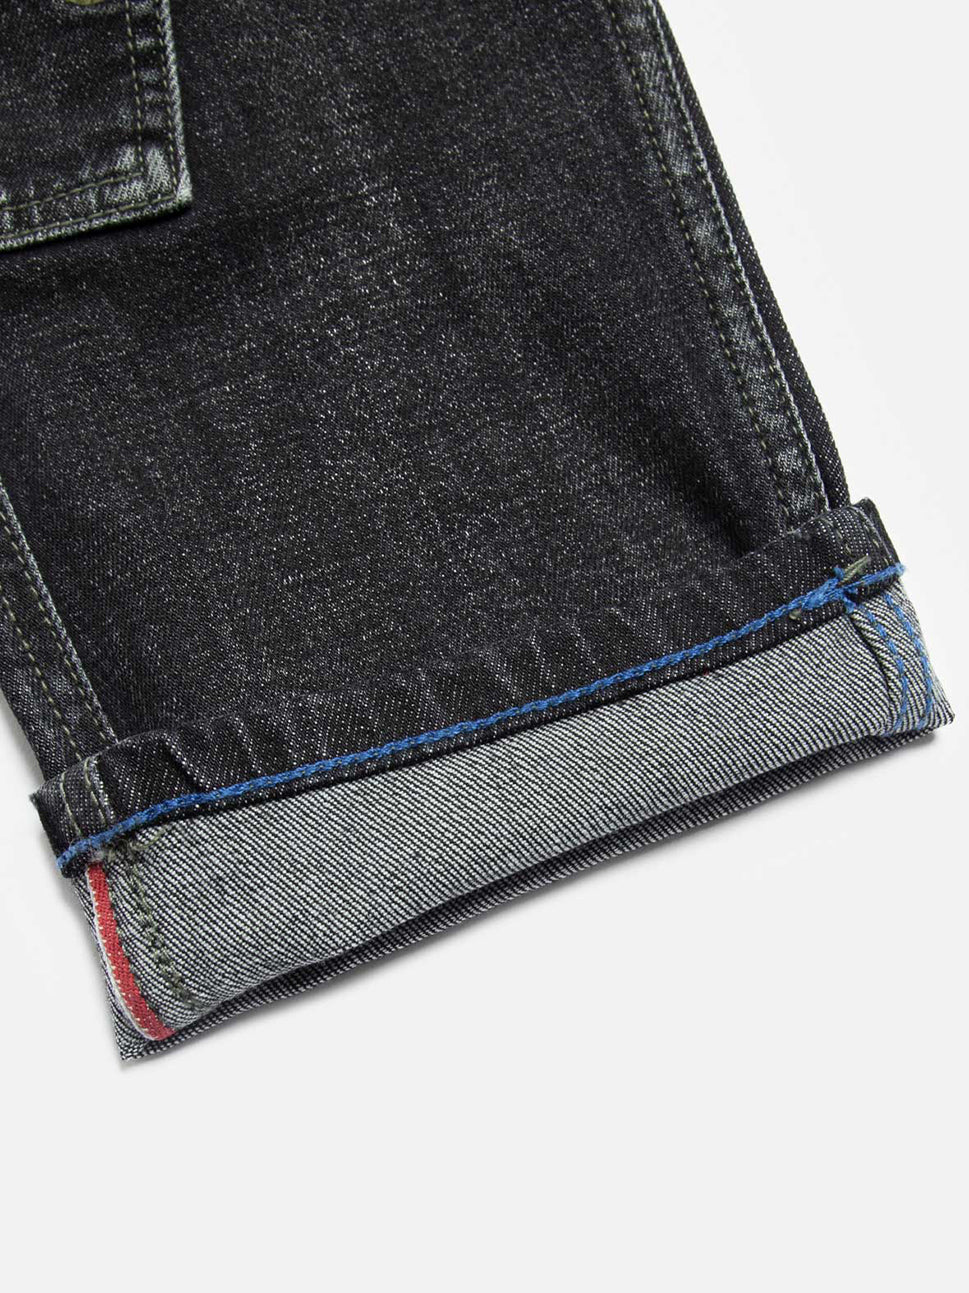 Evisu Dark Black Seagull Printed & Allover Embroidery Multi-Pocket Jeans